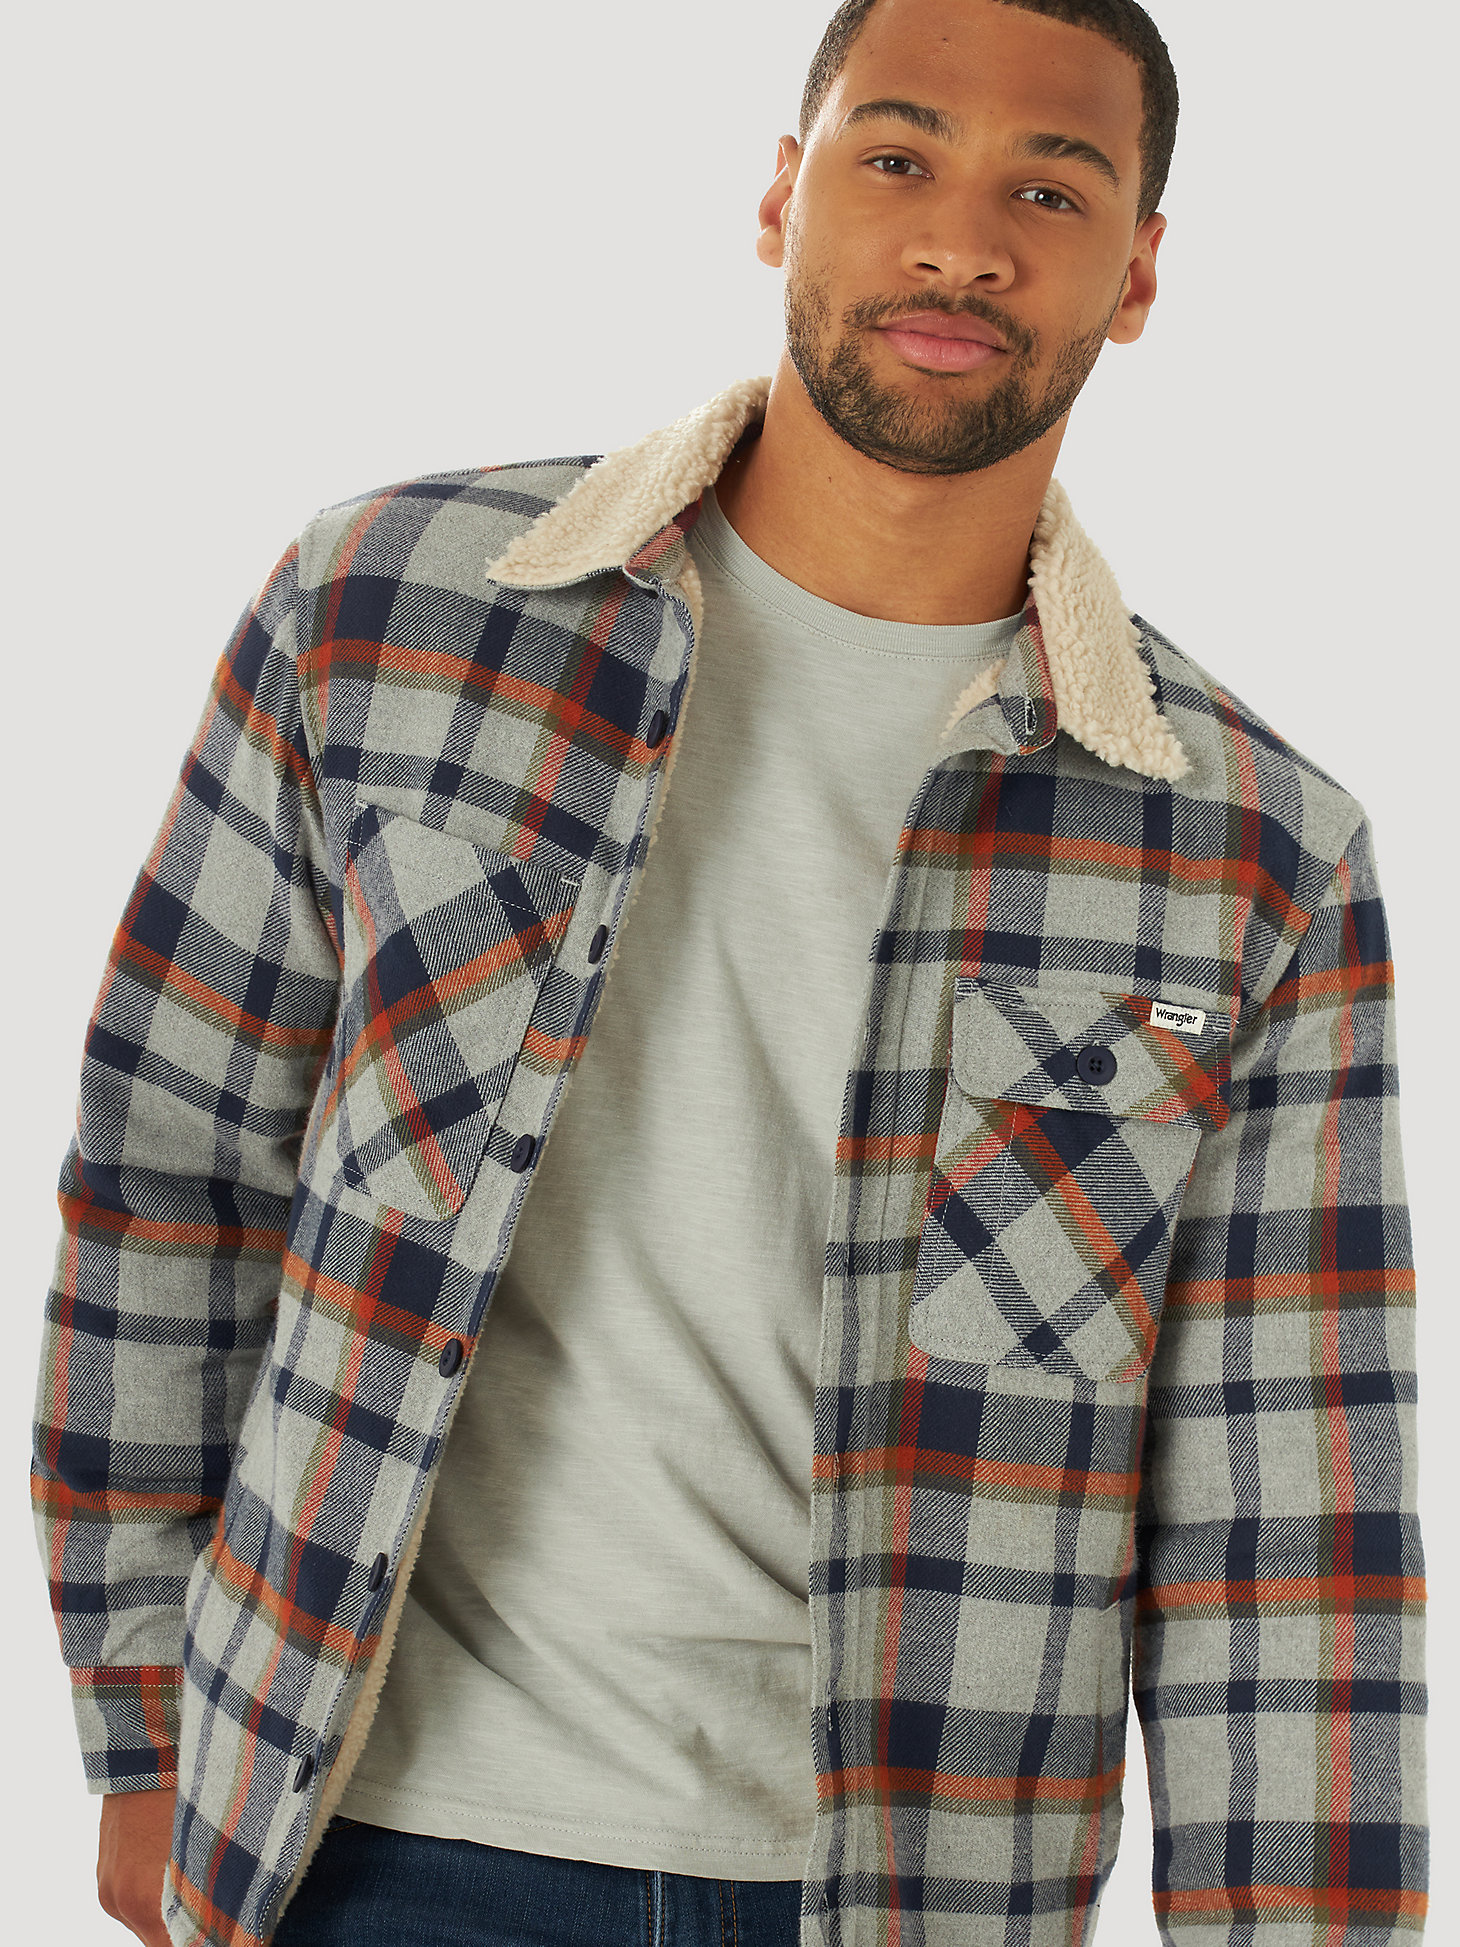 Men's Wrangler® Sherpa Collar Plaid Shirt Jacket in Grey Plaid alternative view 6